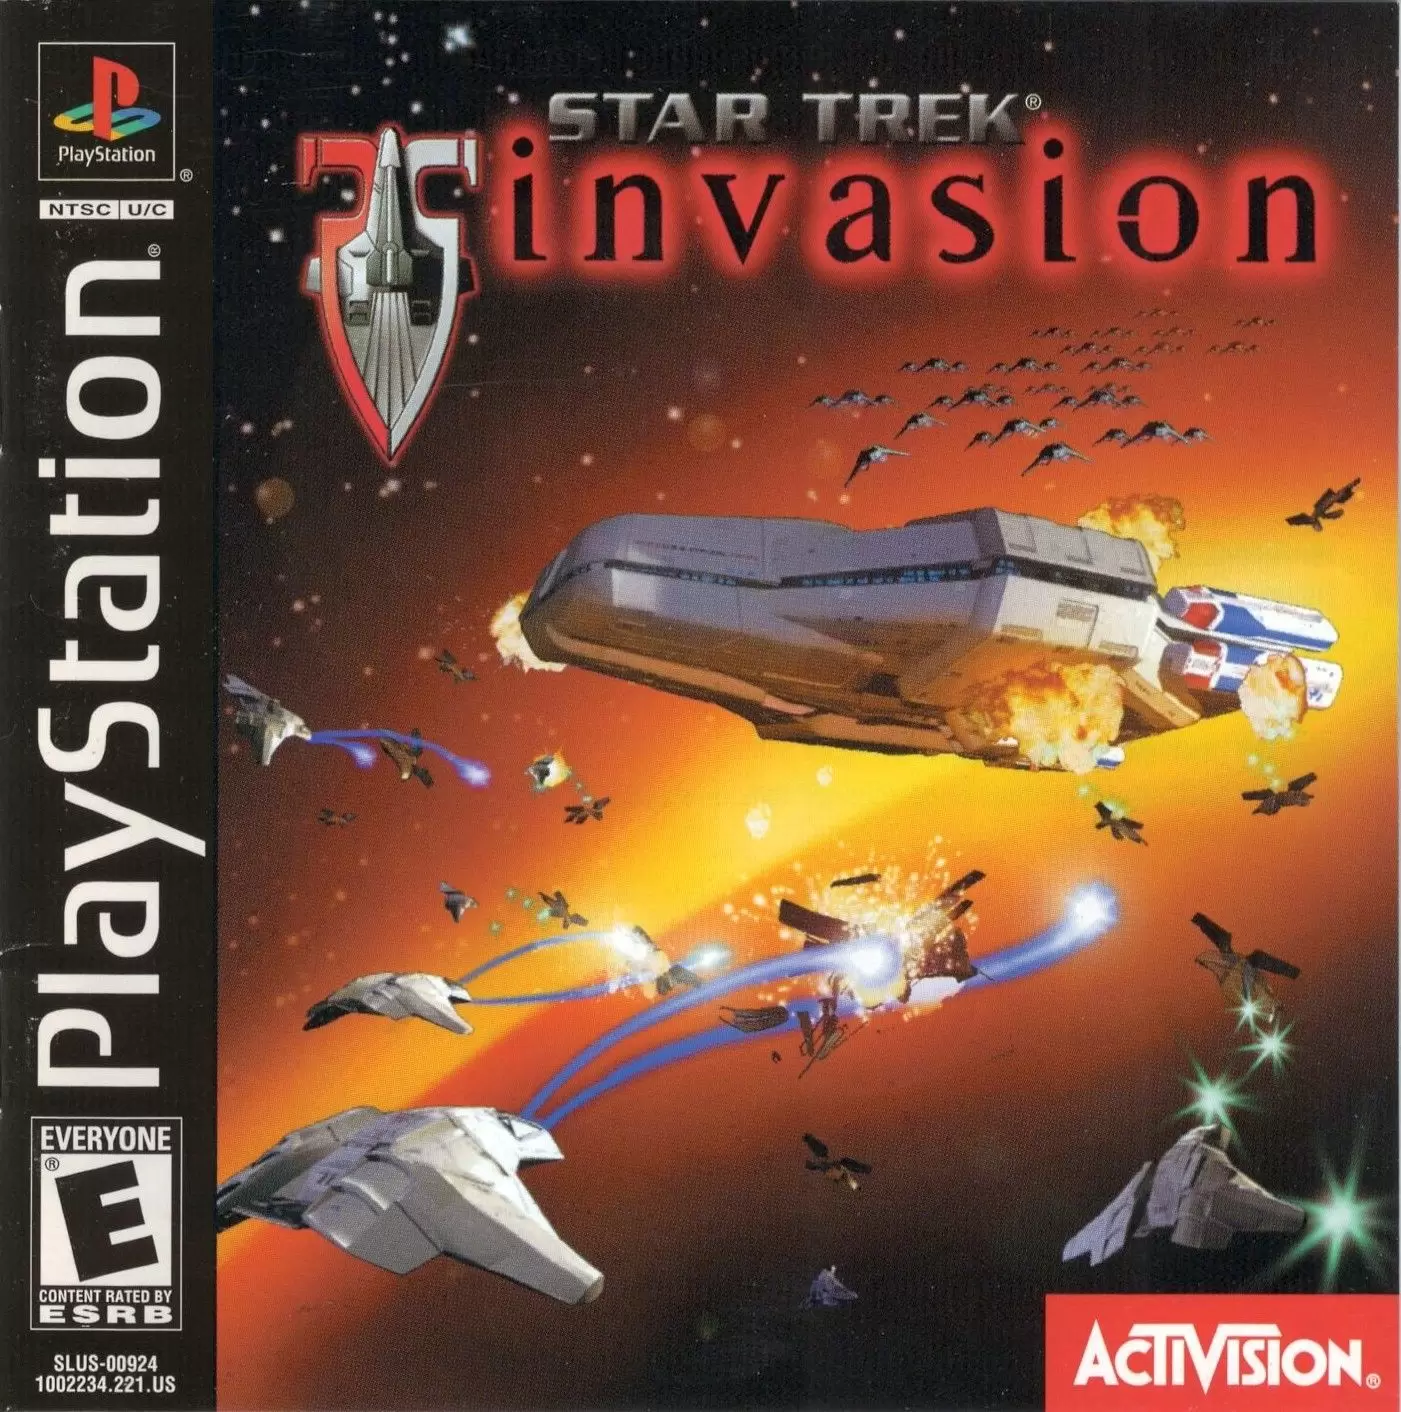 Playstation games - Star Trek: Invasion